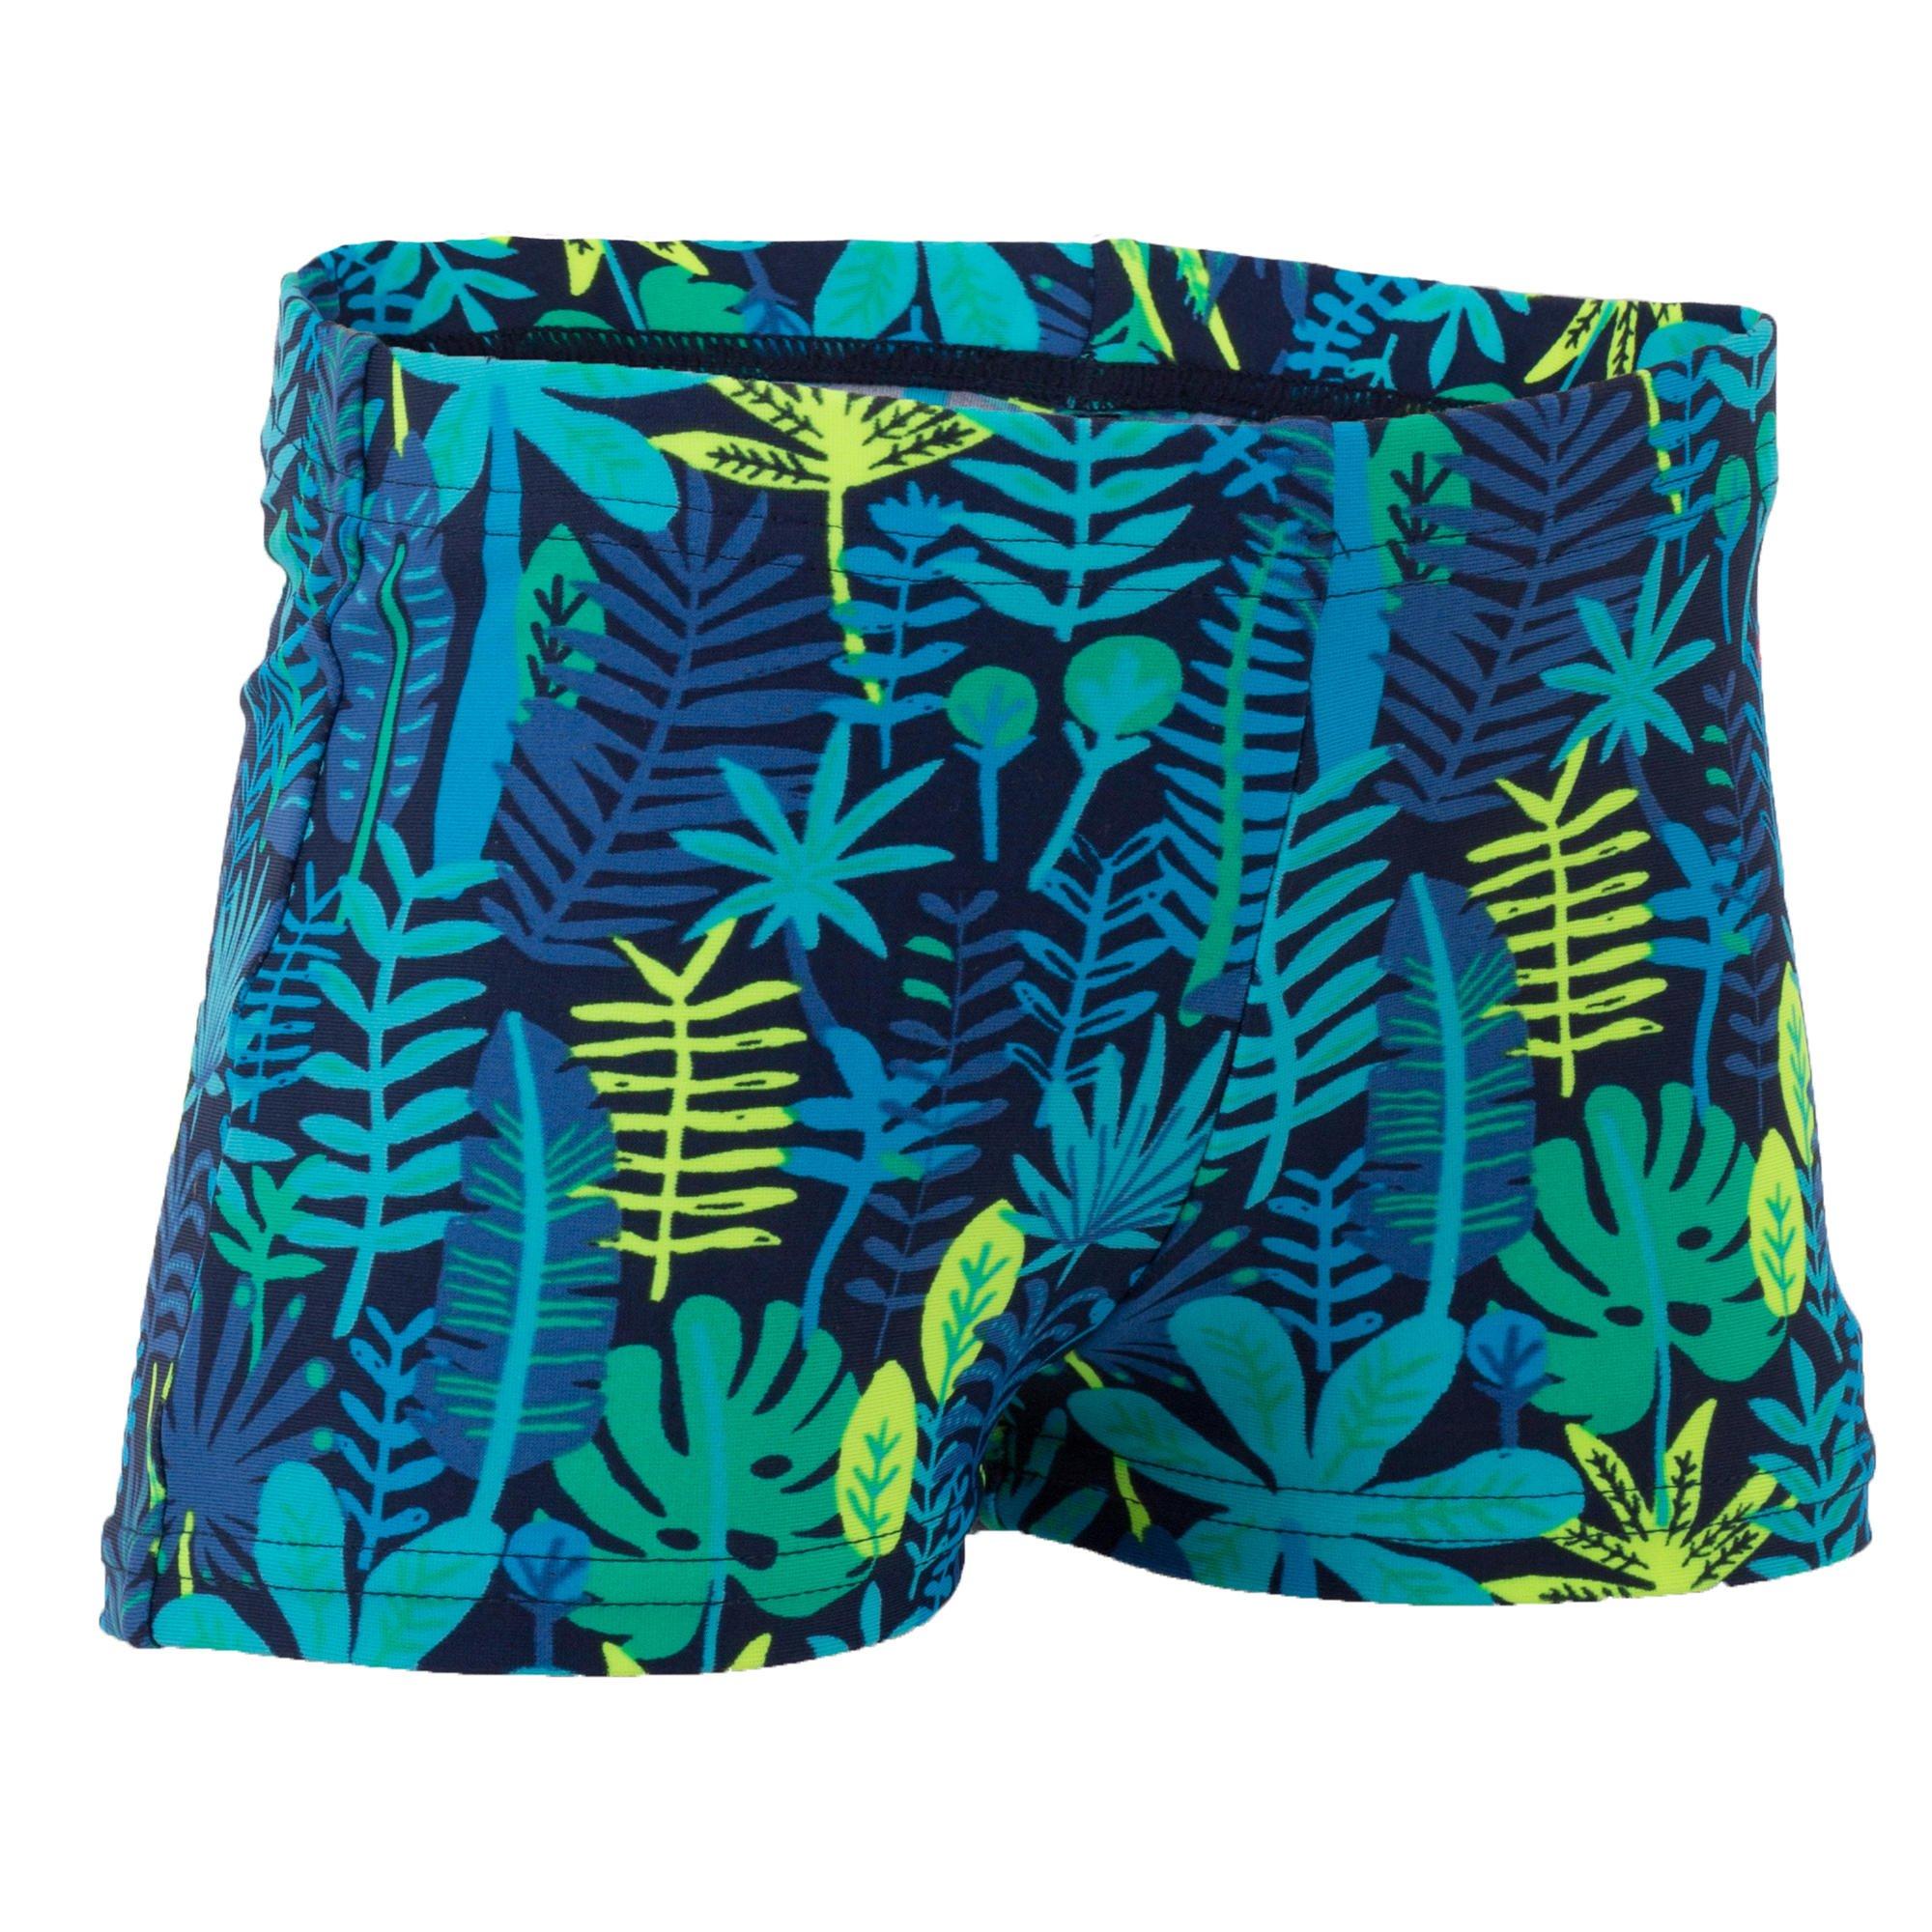 Decathlon Swim Shorts - Jungle Print